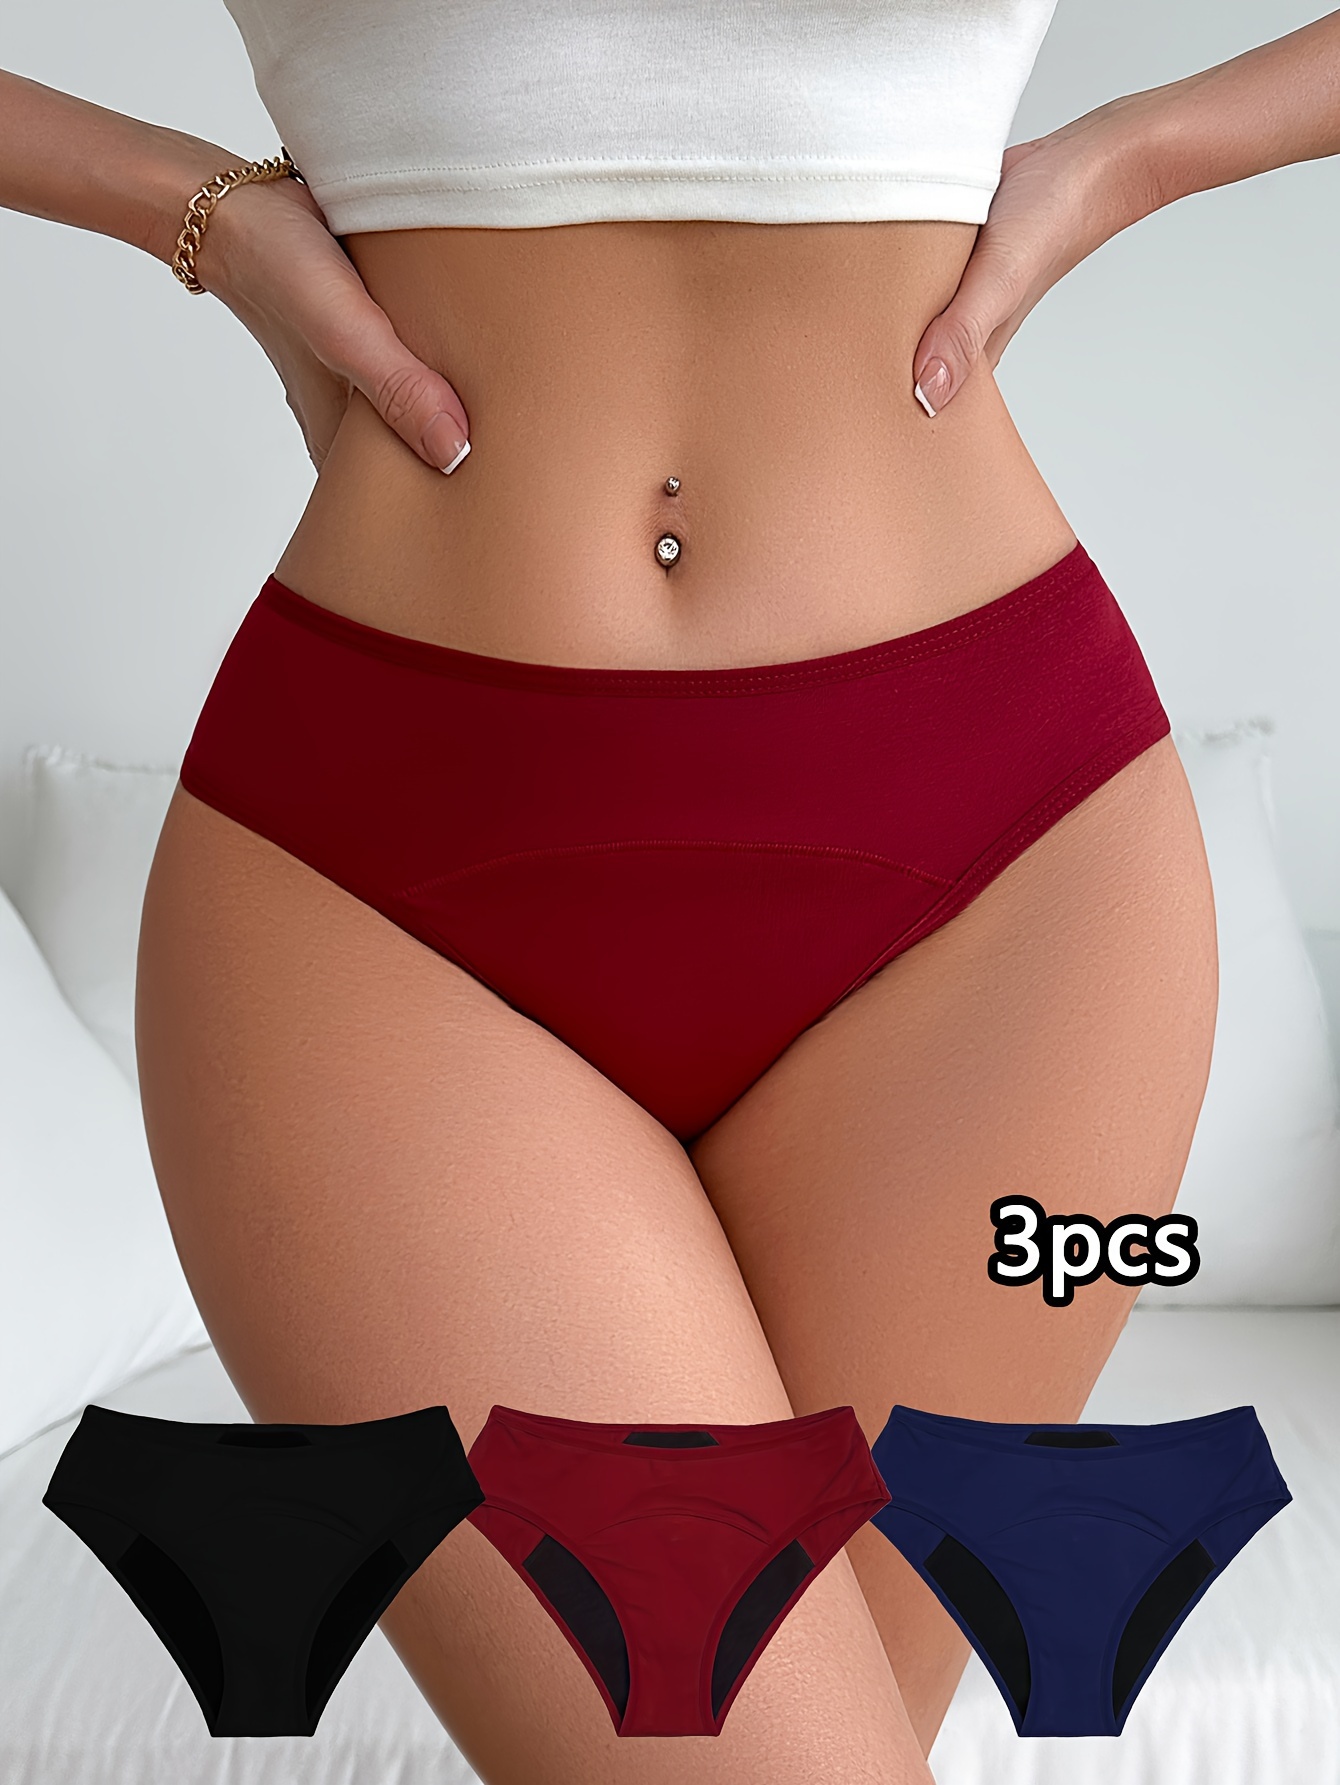 3pcs Period Pants Heavy Flow Womens Leakproof Panties Cotton Menstrual Underwear  Women Period Briefs